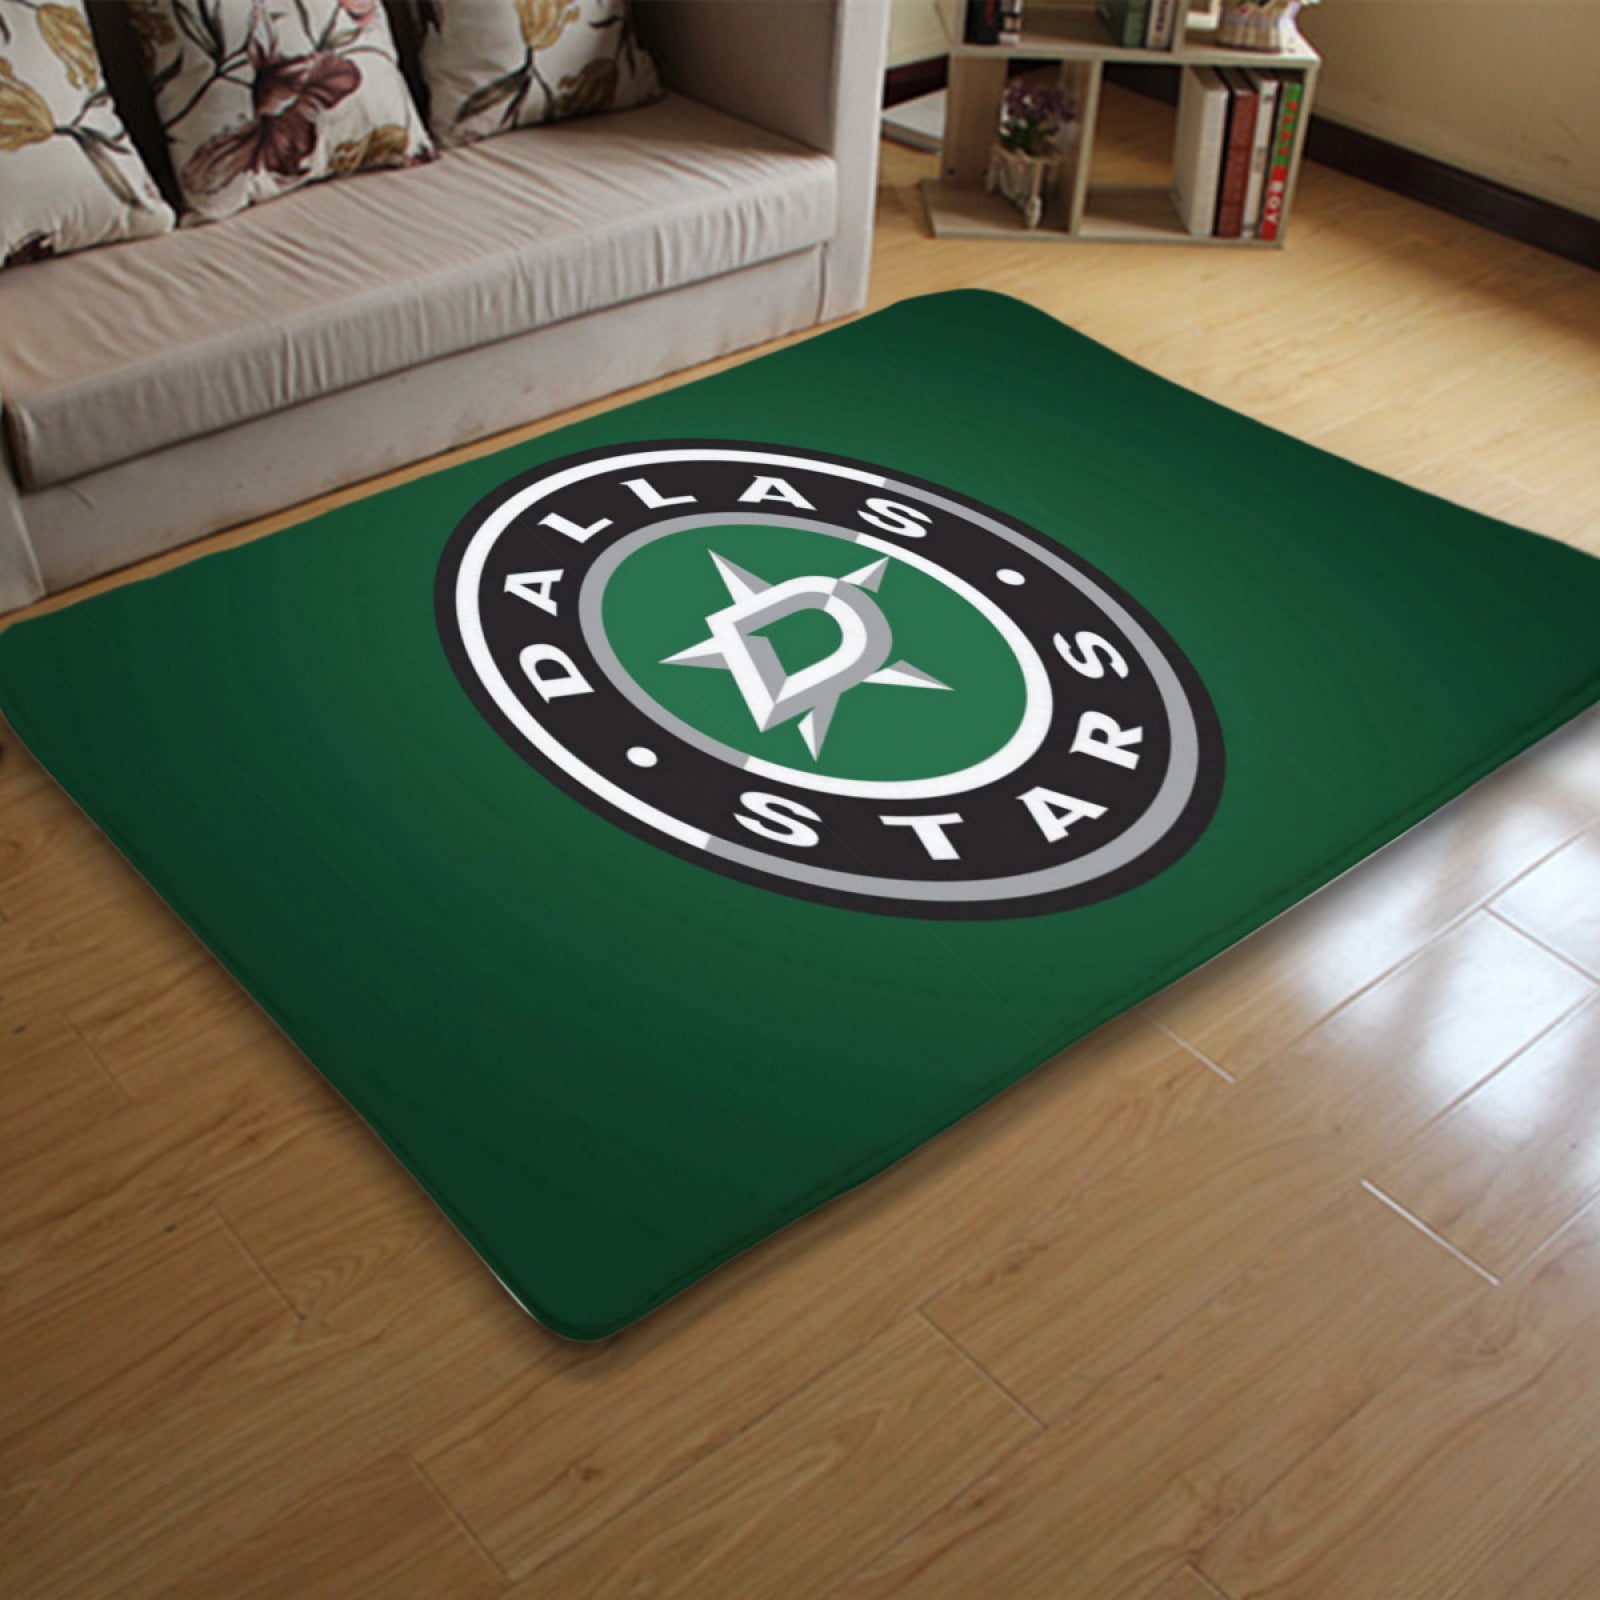 Dallas Stars Hockey League Carpet Living Room Bedroom Mats Kitchen Bathroom Rugs